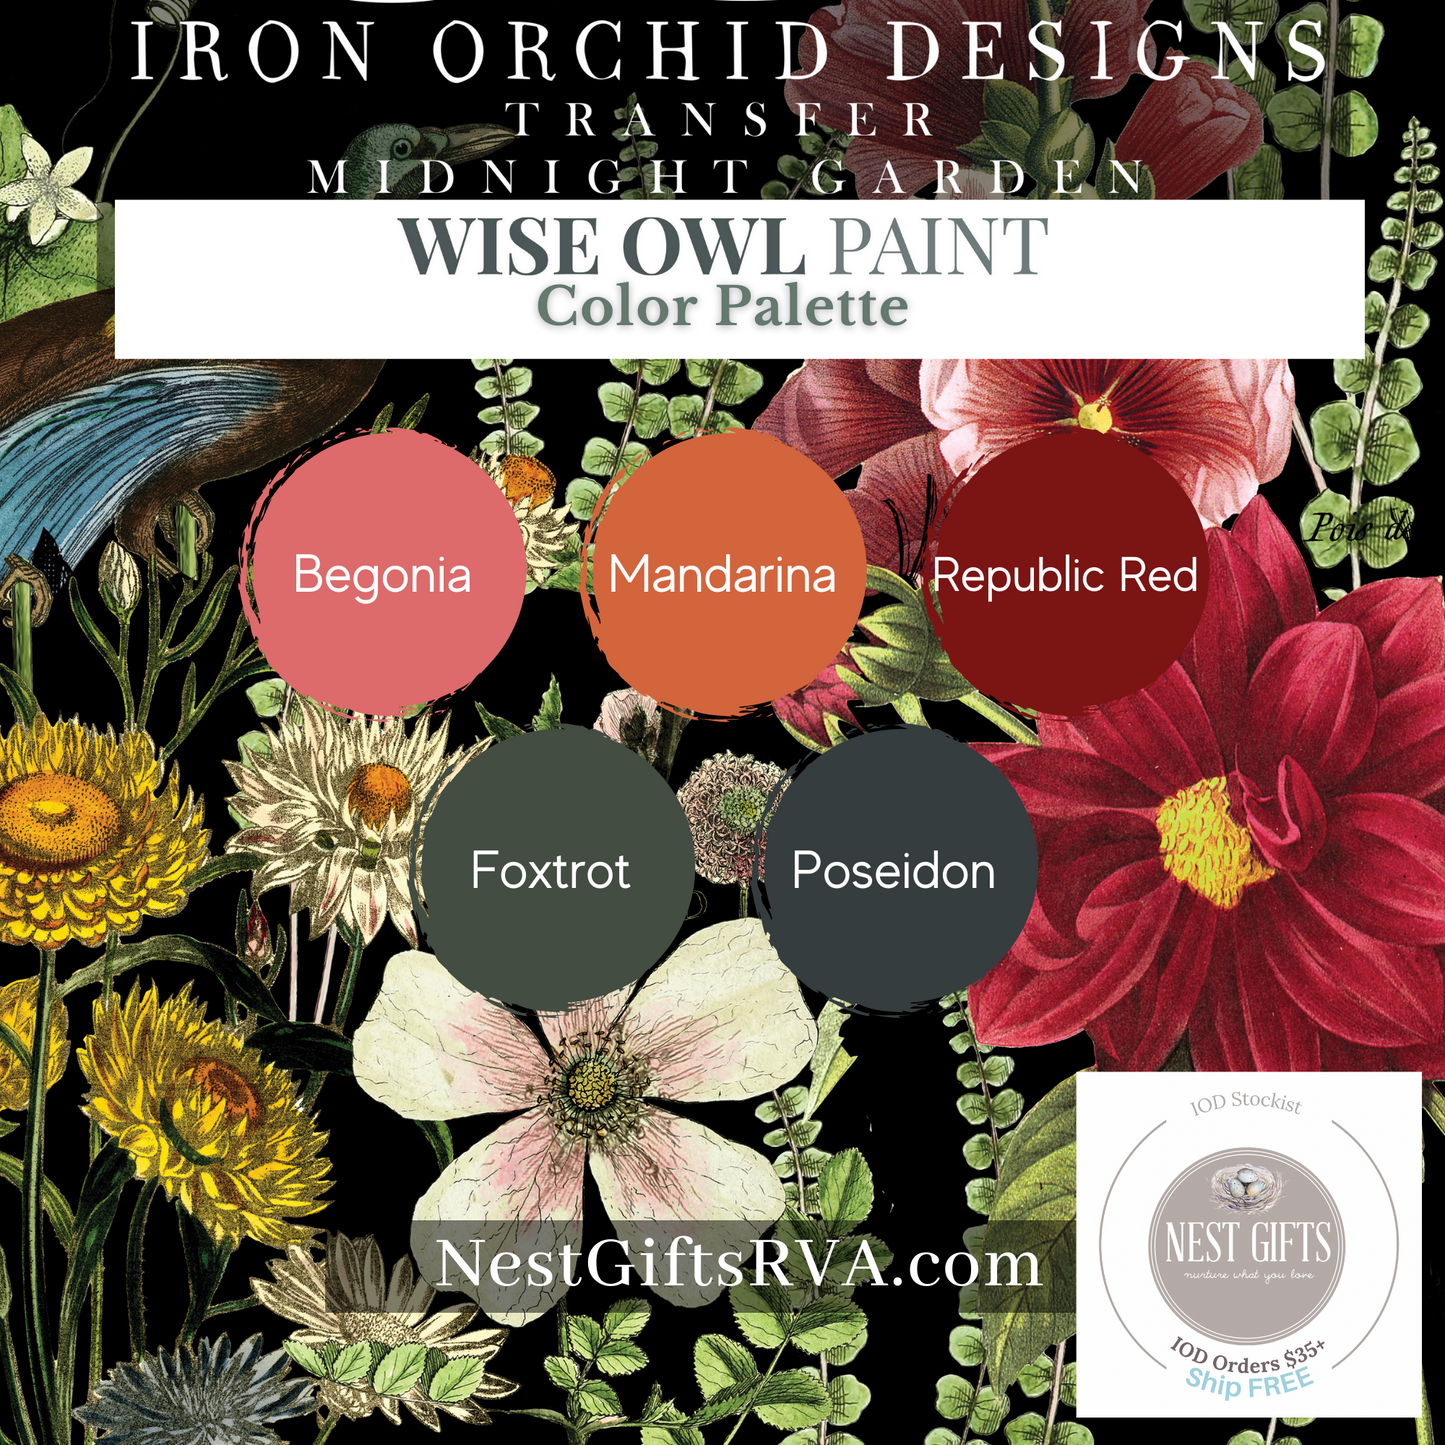 IOD Transfer Midnight Garden by Iron Orchid Designs